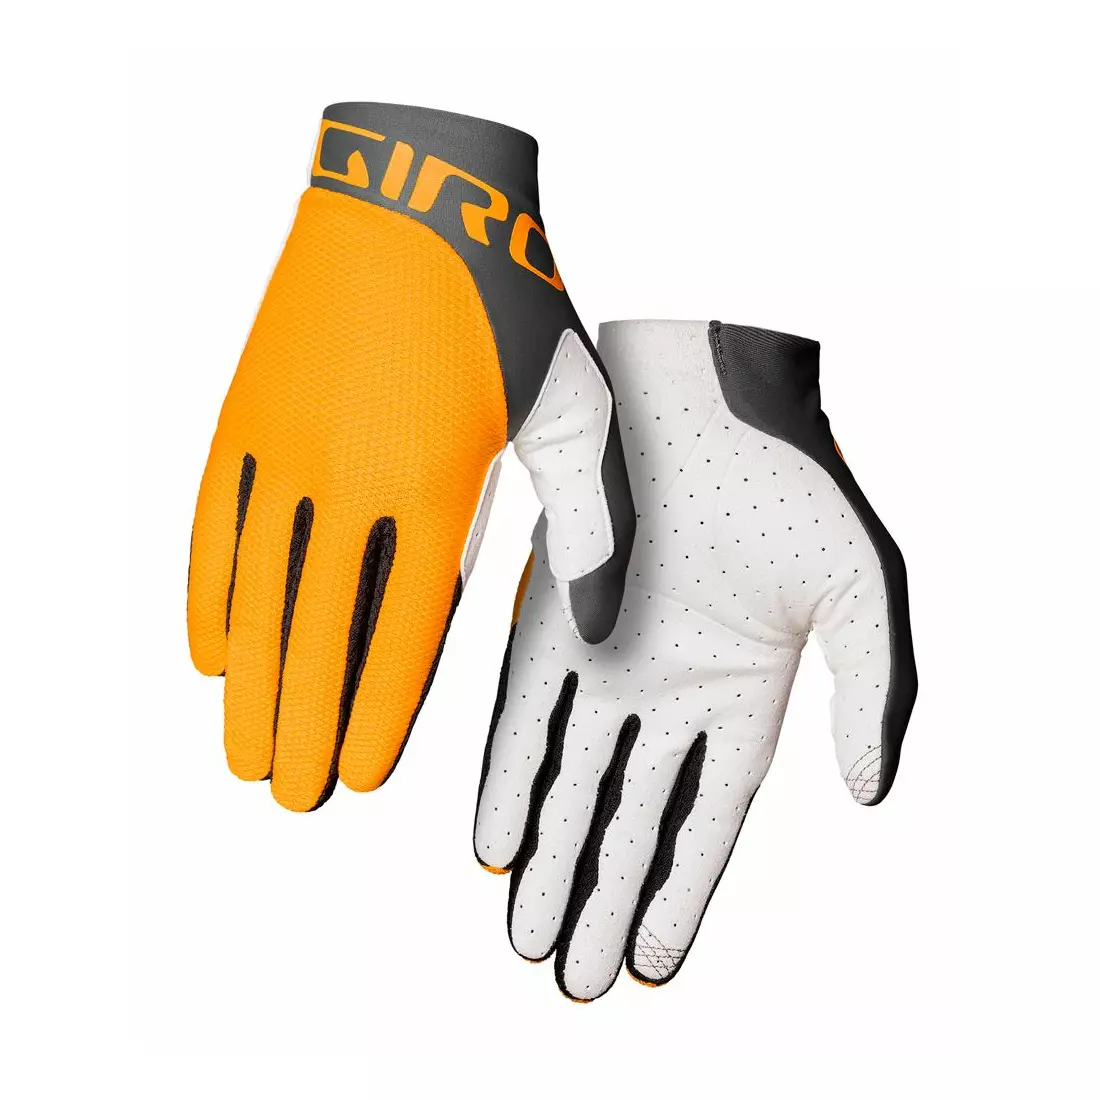 GIRO men's cycling gloves TRIXTER yellow port gray GR-7127460